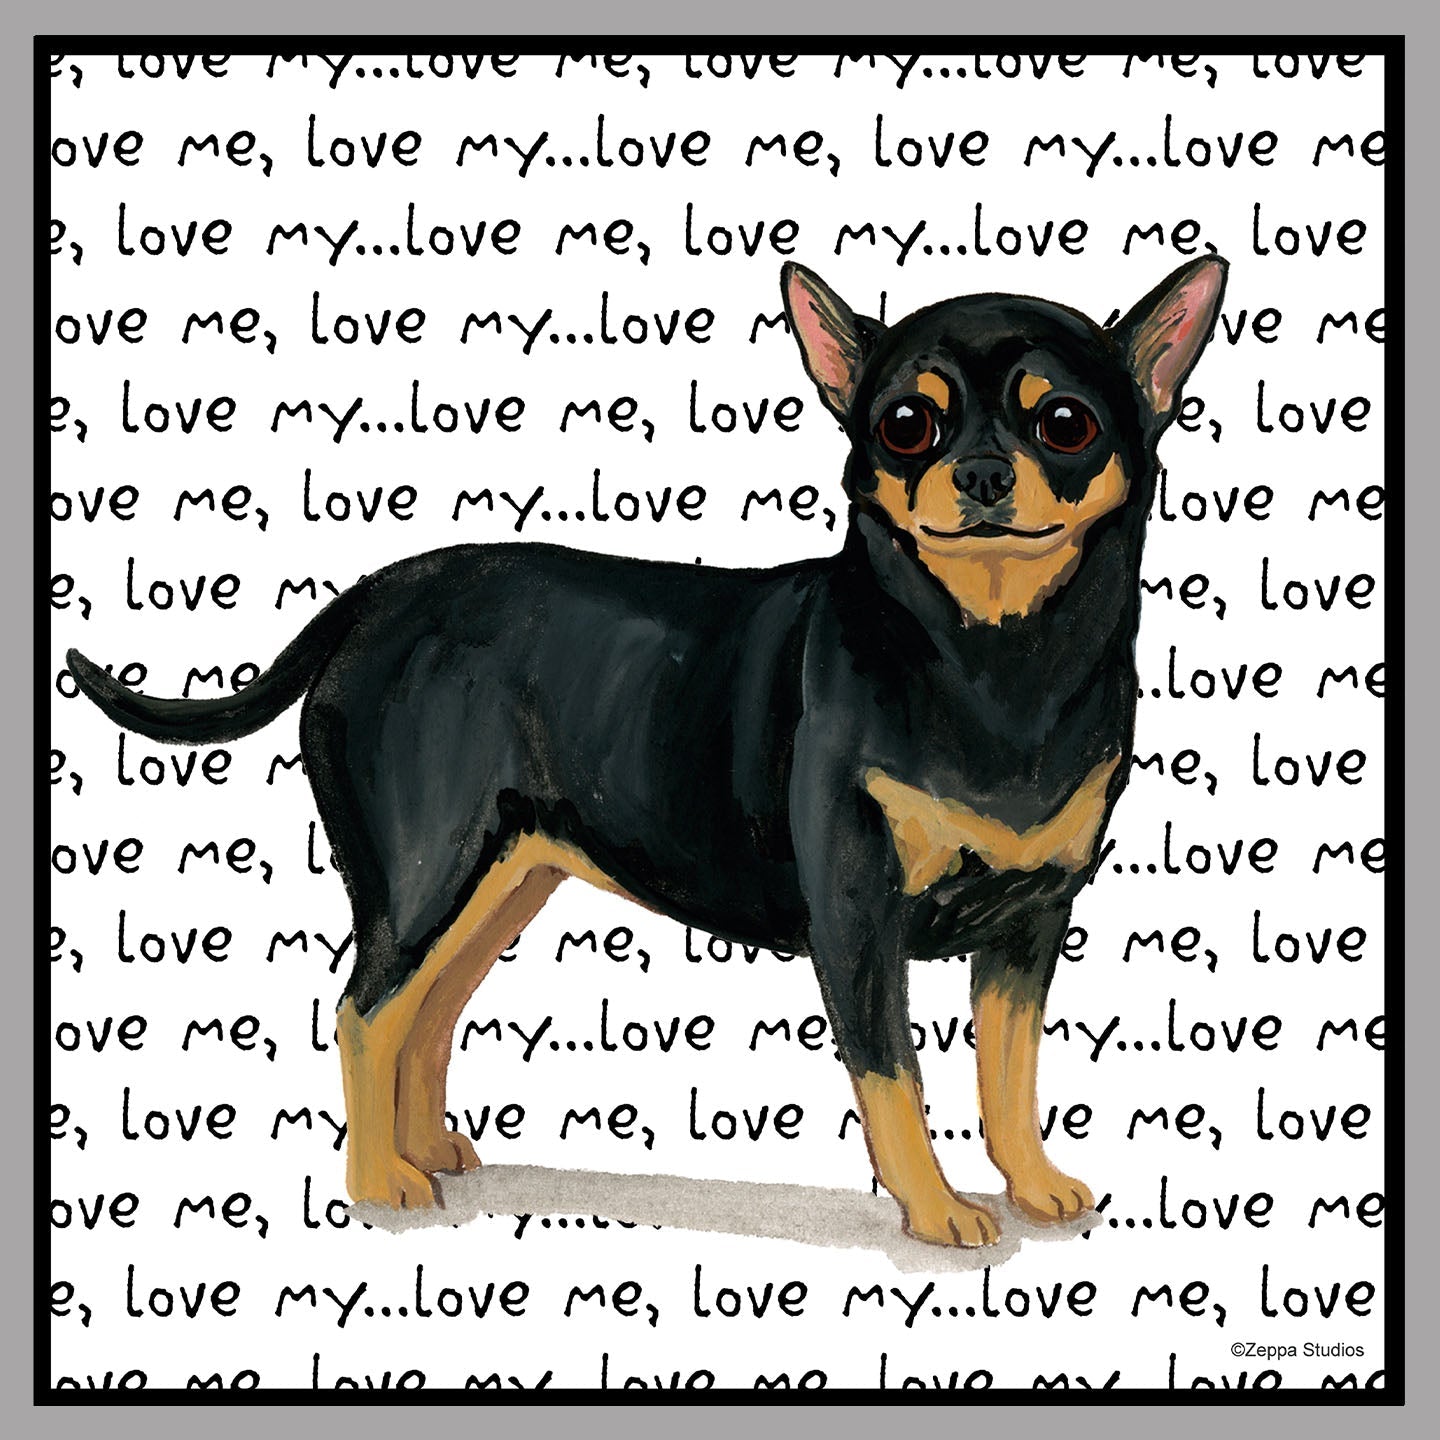 Chihuahua Love Text - Women's V-Neck T-Shirt